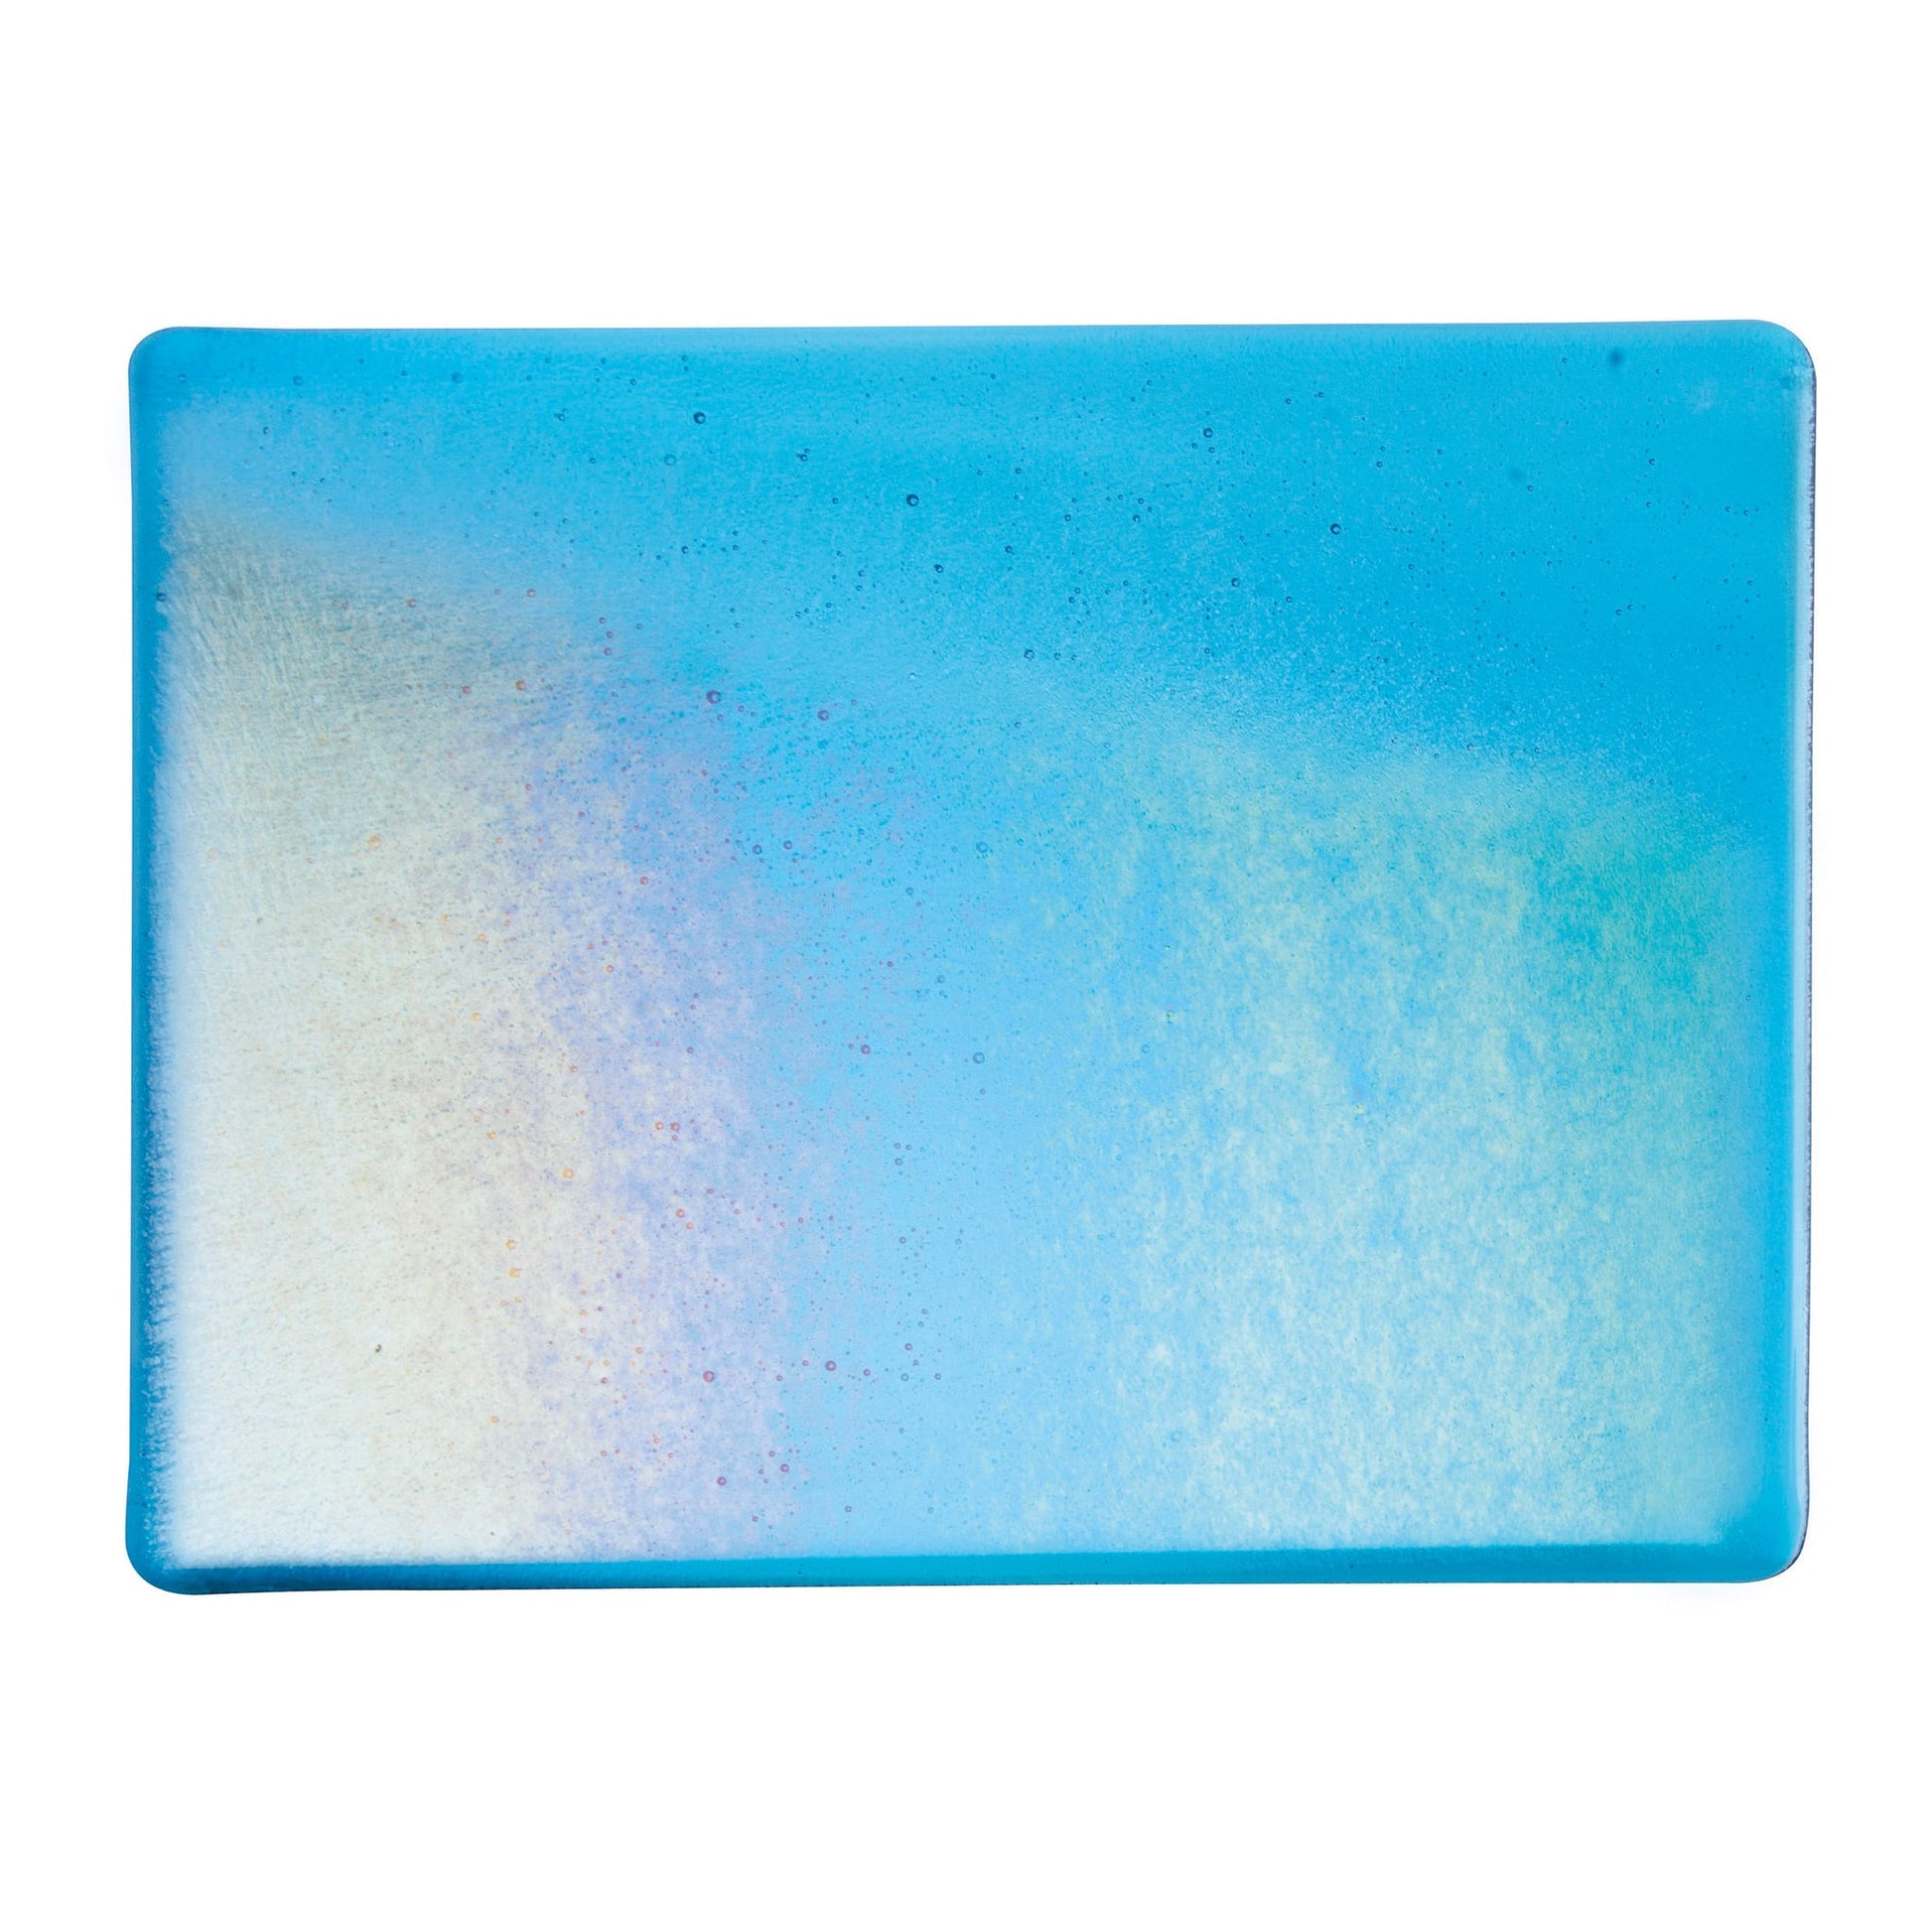 Bullseye COE90 Fusing Glass 001116 Turquoise Blue, Iridescent, Rainbow Handy Sheet